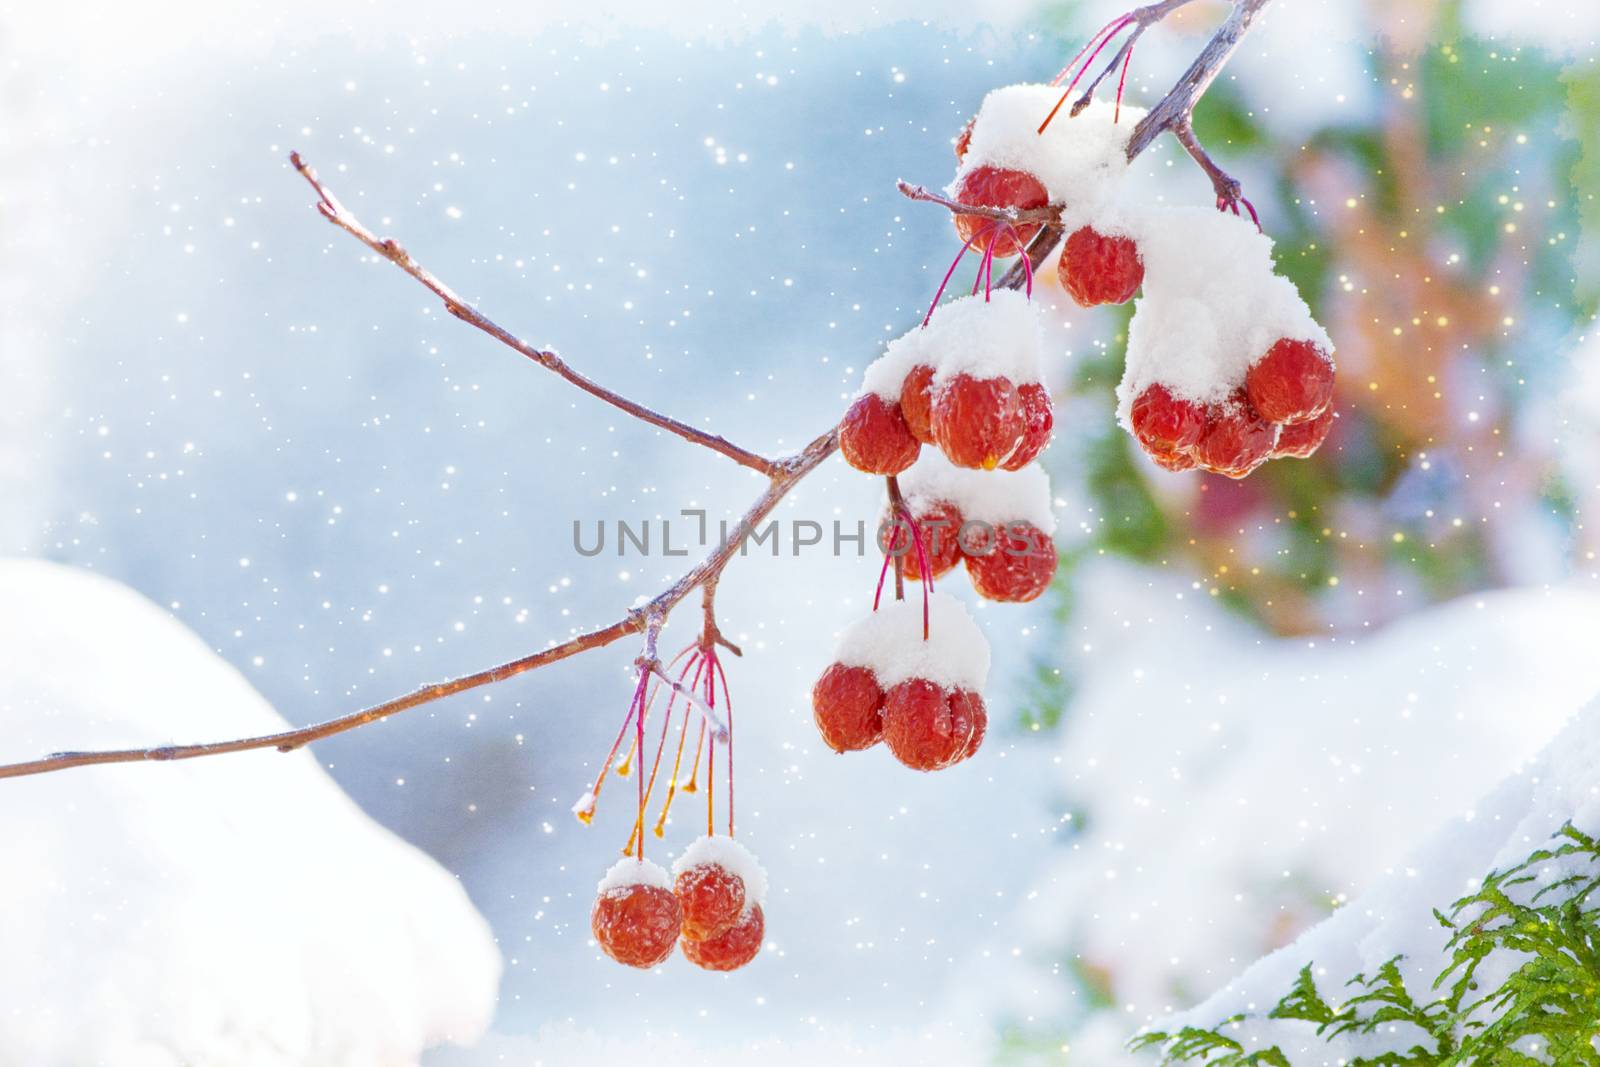 Winter's Beautiful Bounty by songbird839